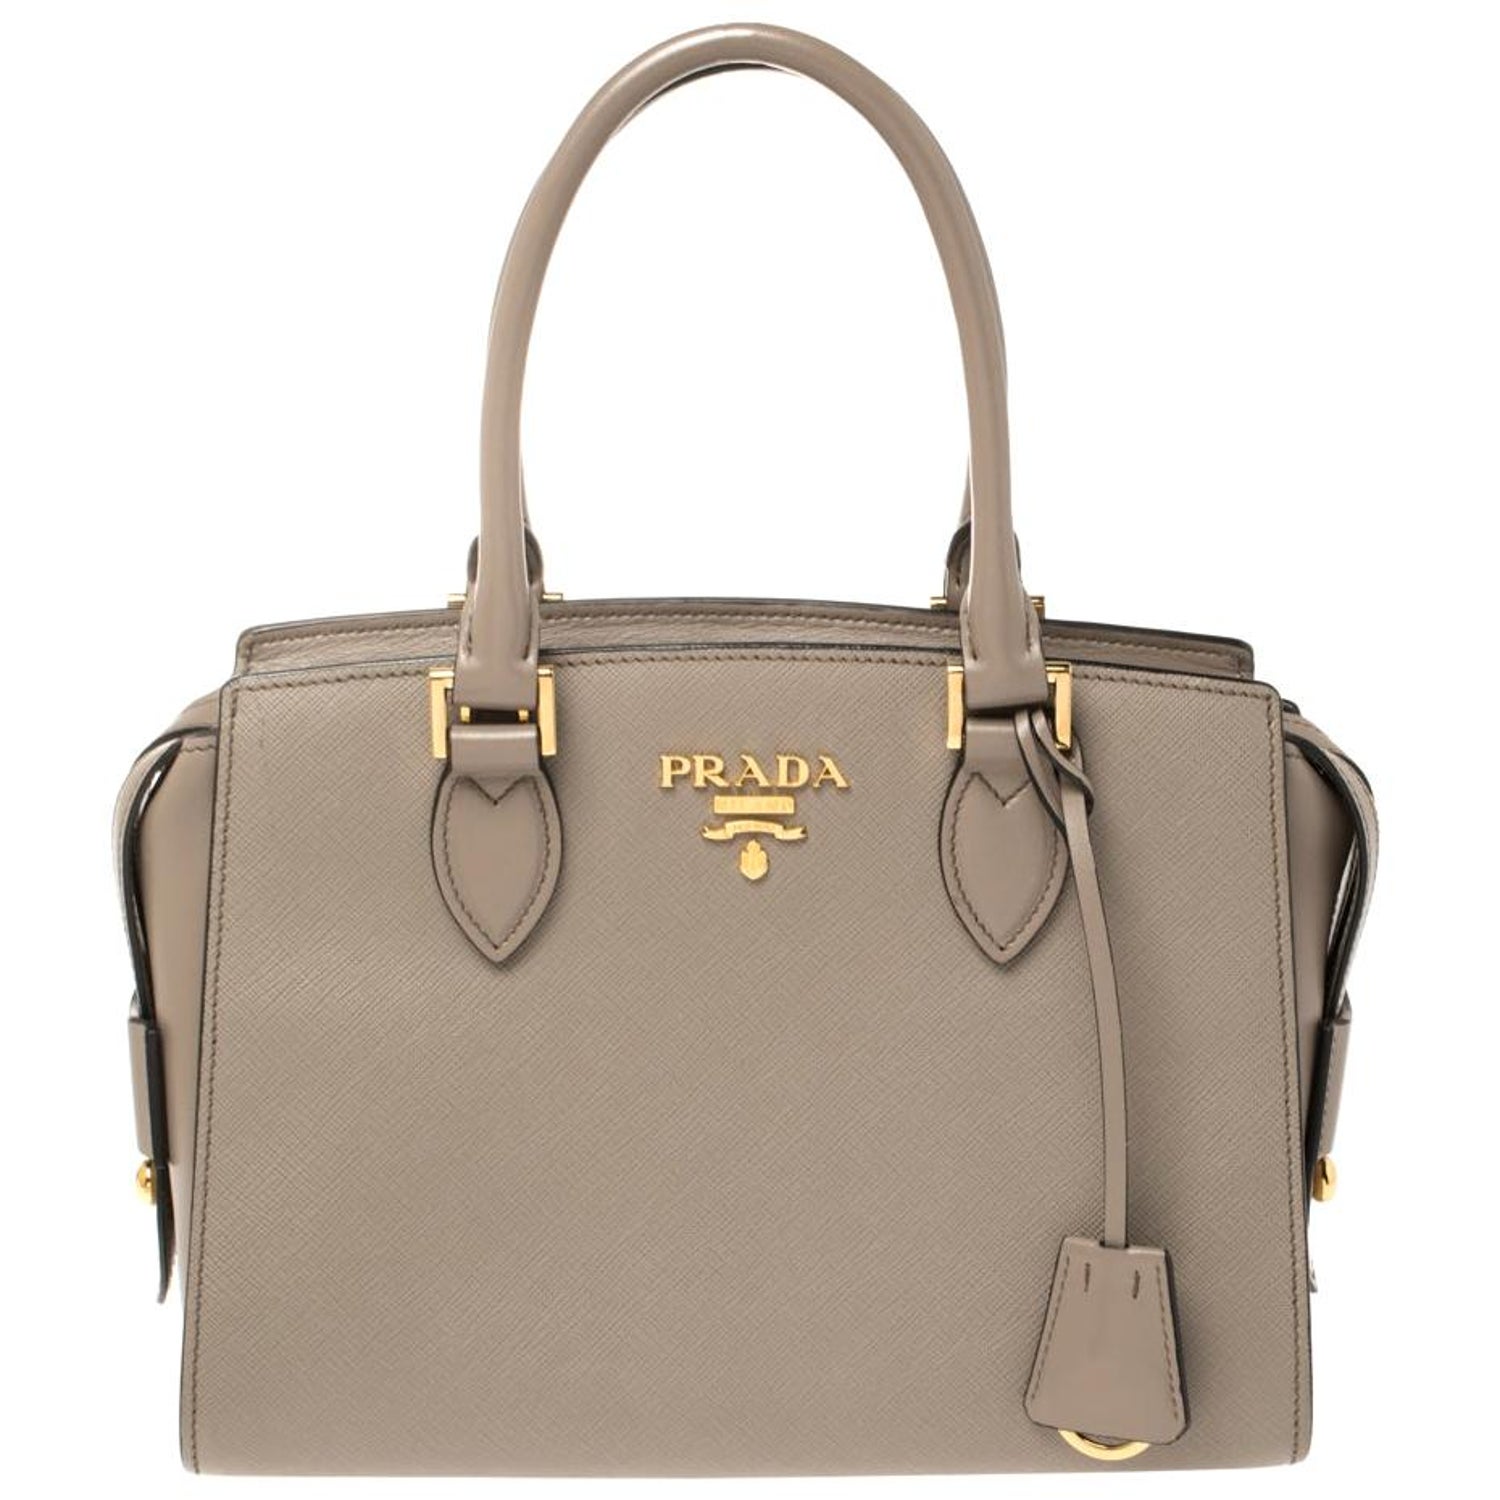 Borsa Prada - For Sale on 1stDibs | prada borsa a mano price, borsa prada  2014, prada borsa donna nylon satchel bag